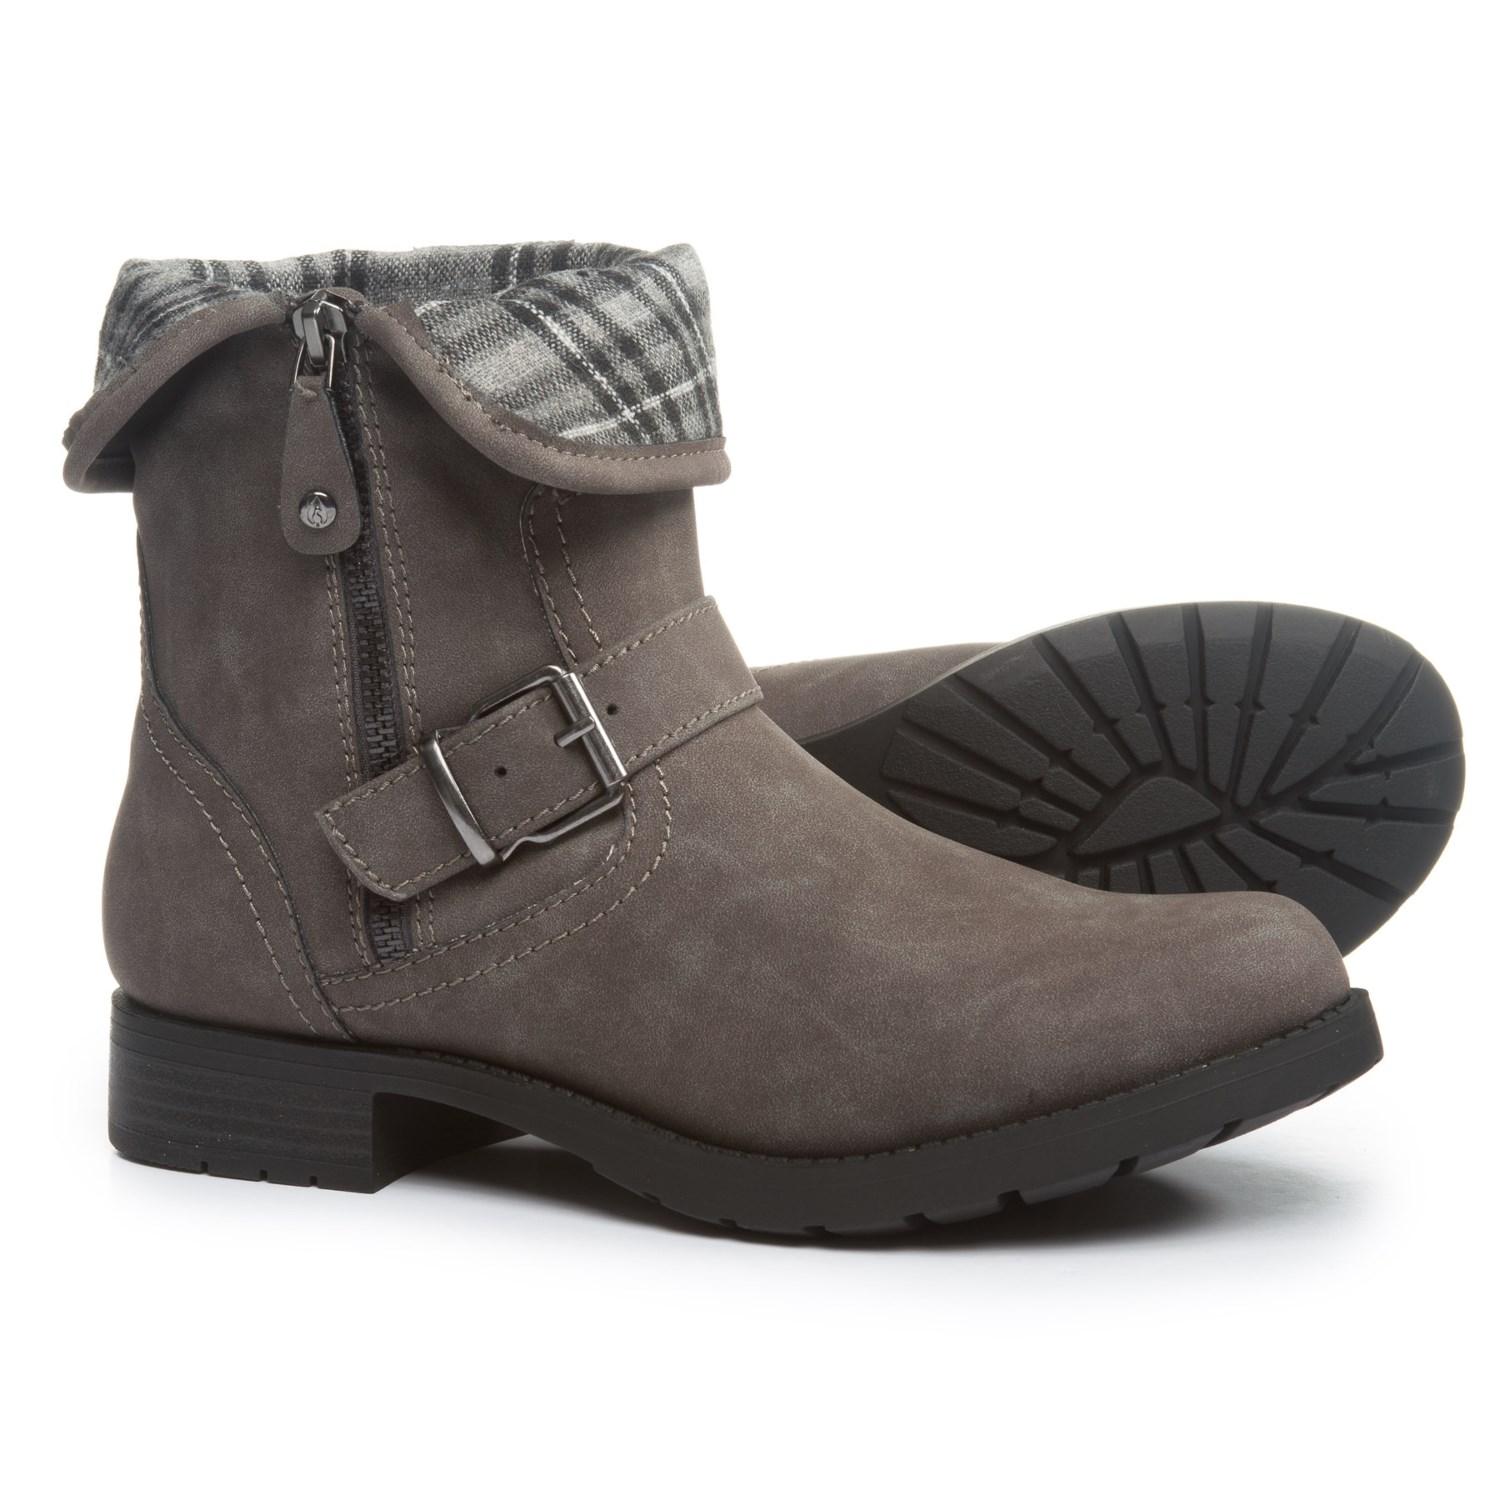 Sporto Corbit Boots in Grey (Gray) - Lyst